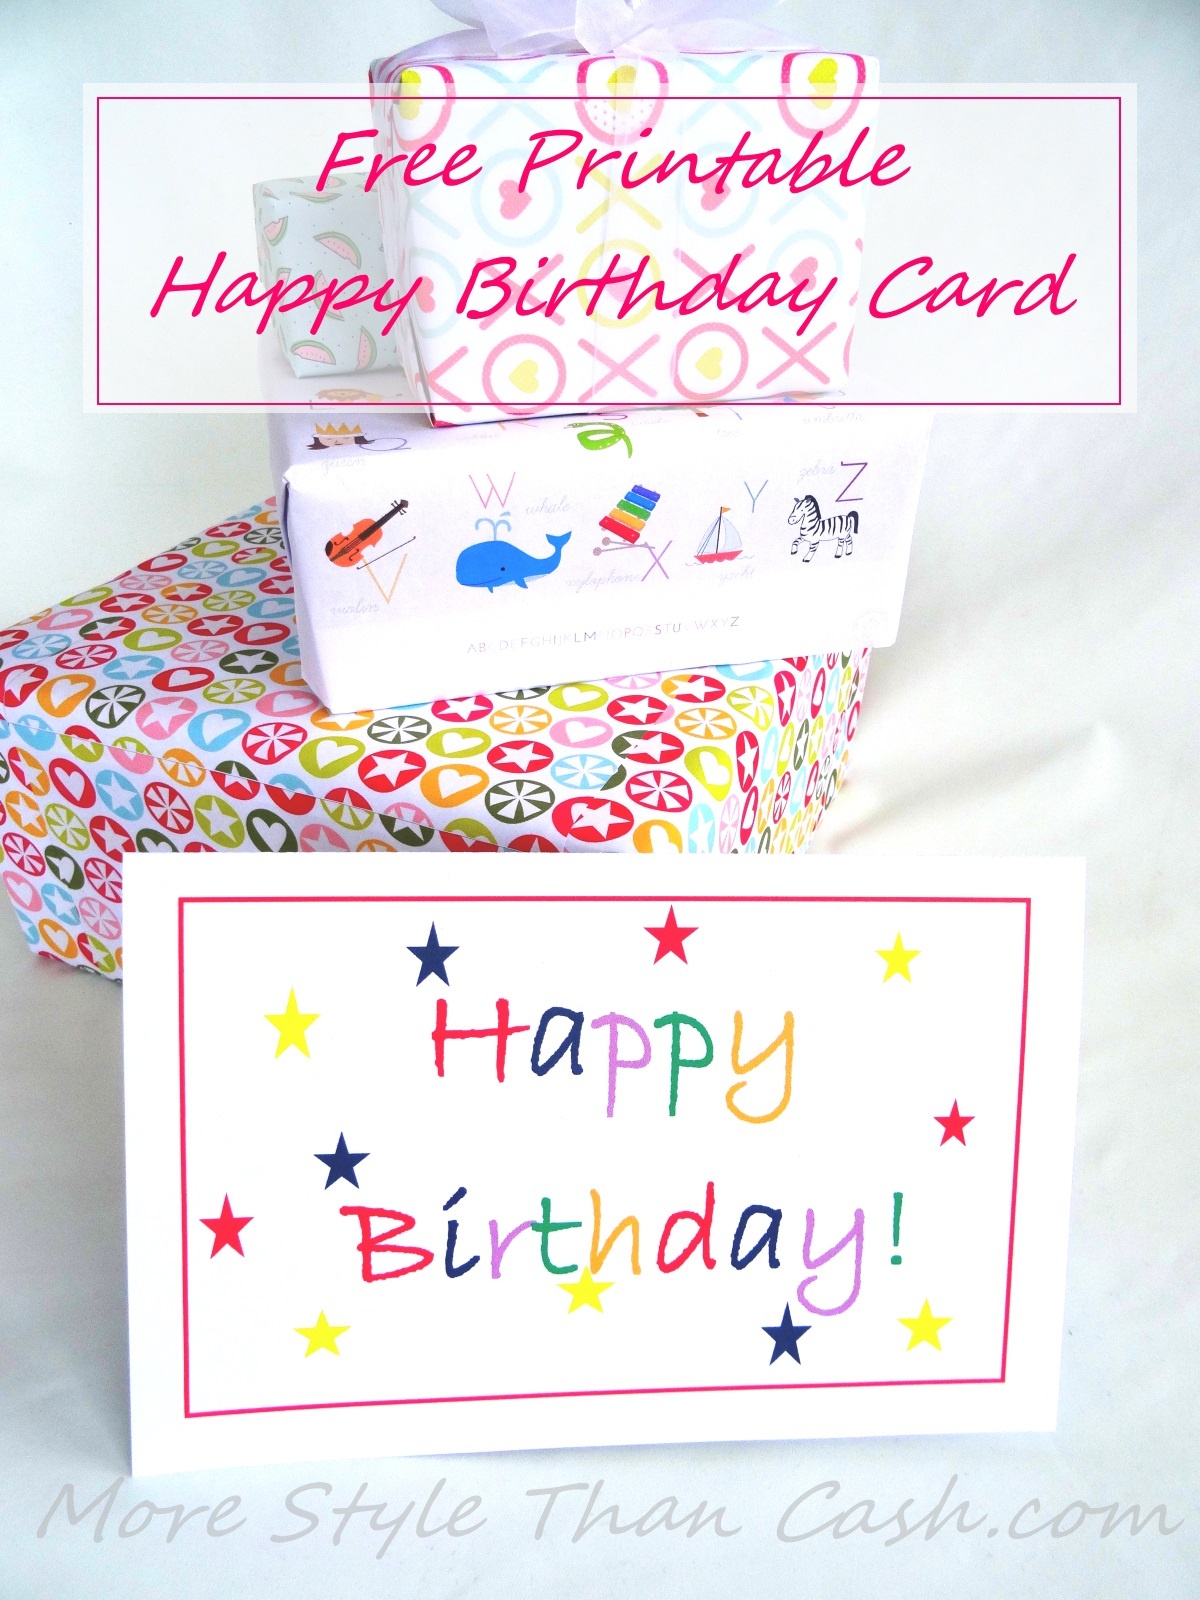 Free Printable Birthday Card - Free Printable Birthday Cards